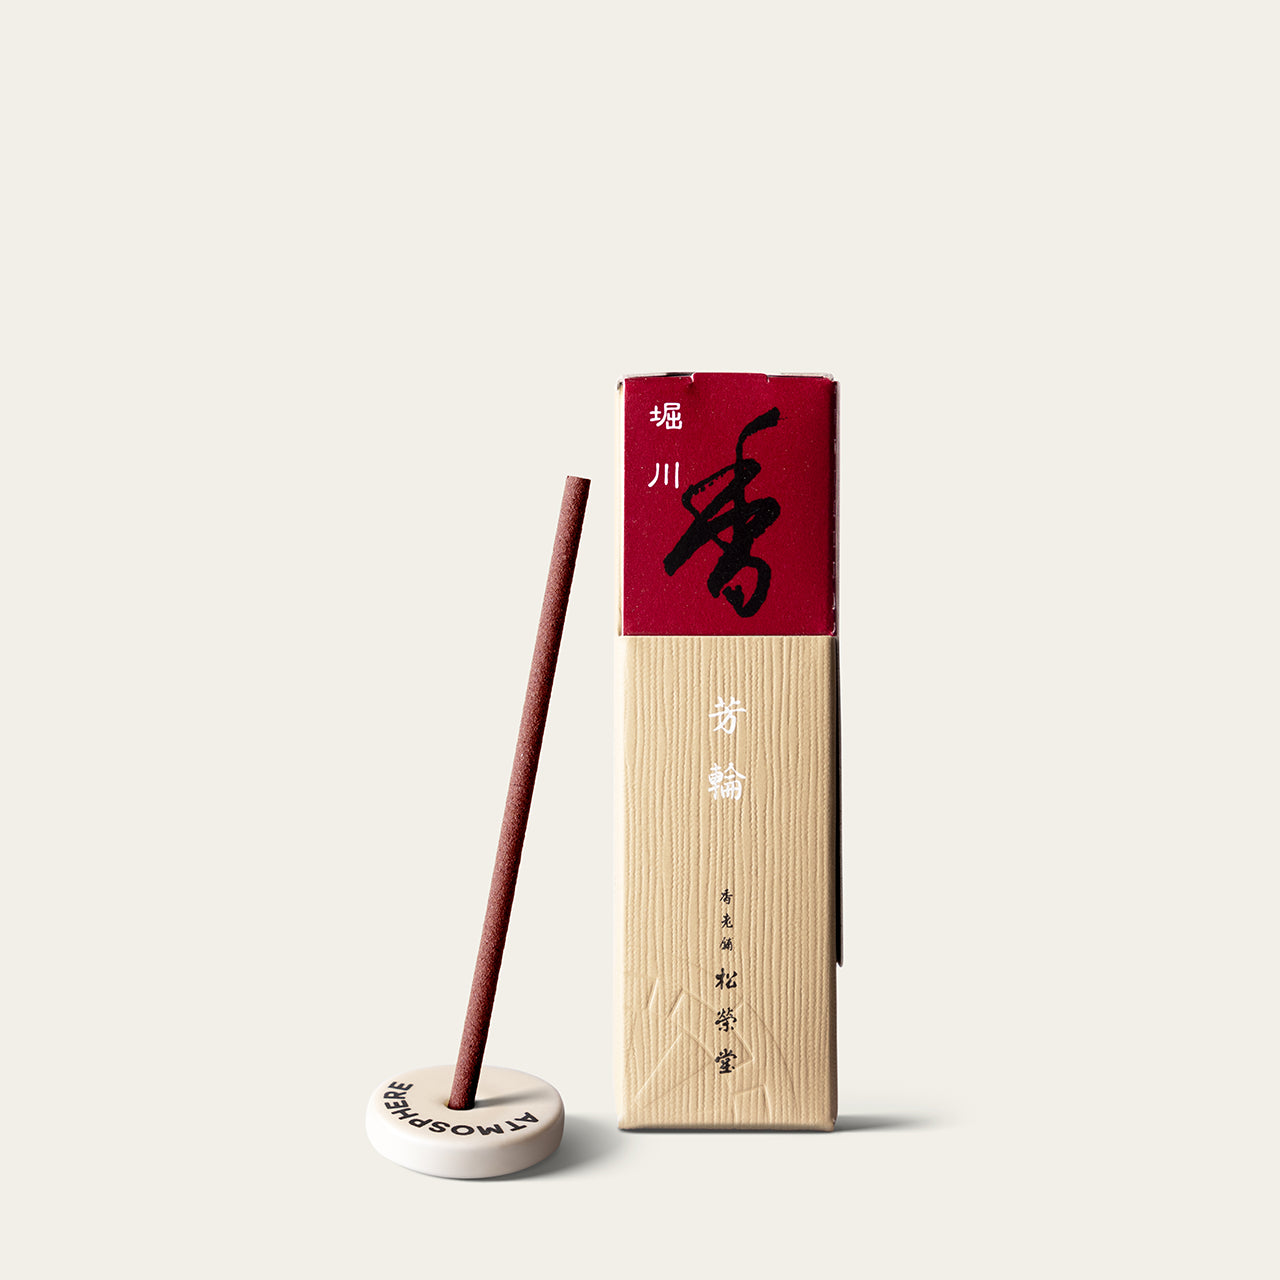 Shoyeido Horin River Path Horikawa Japanese incense sticks (20 sticks) with Atmosphere ceramic incense holder